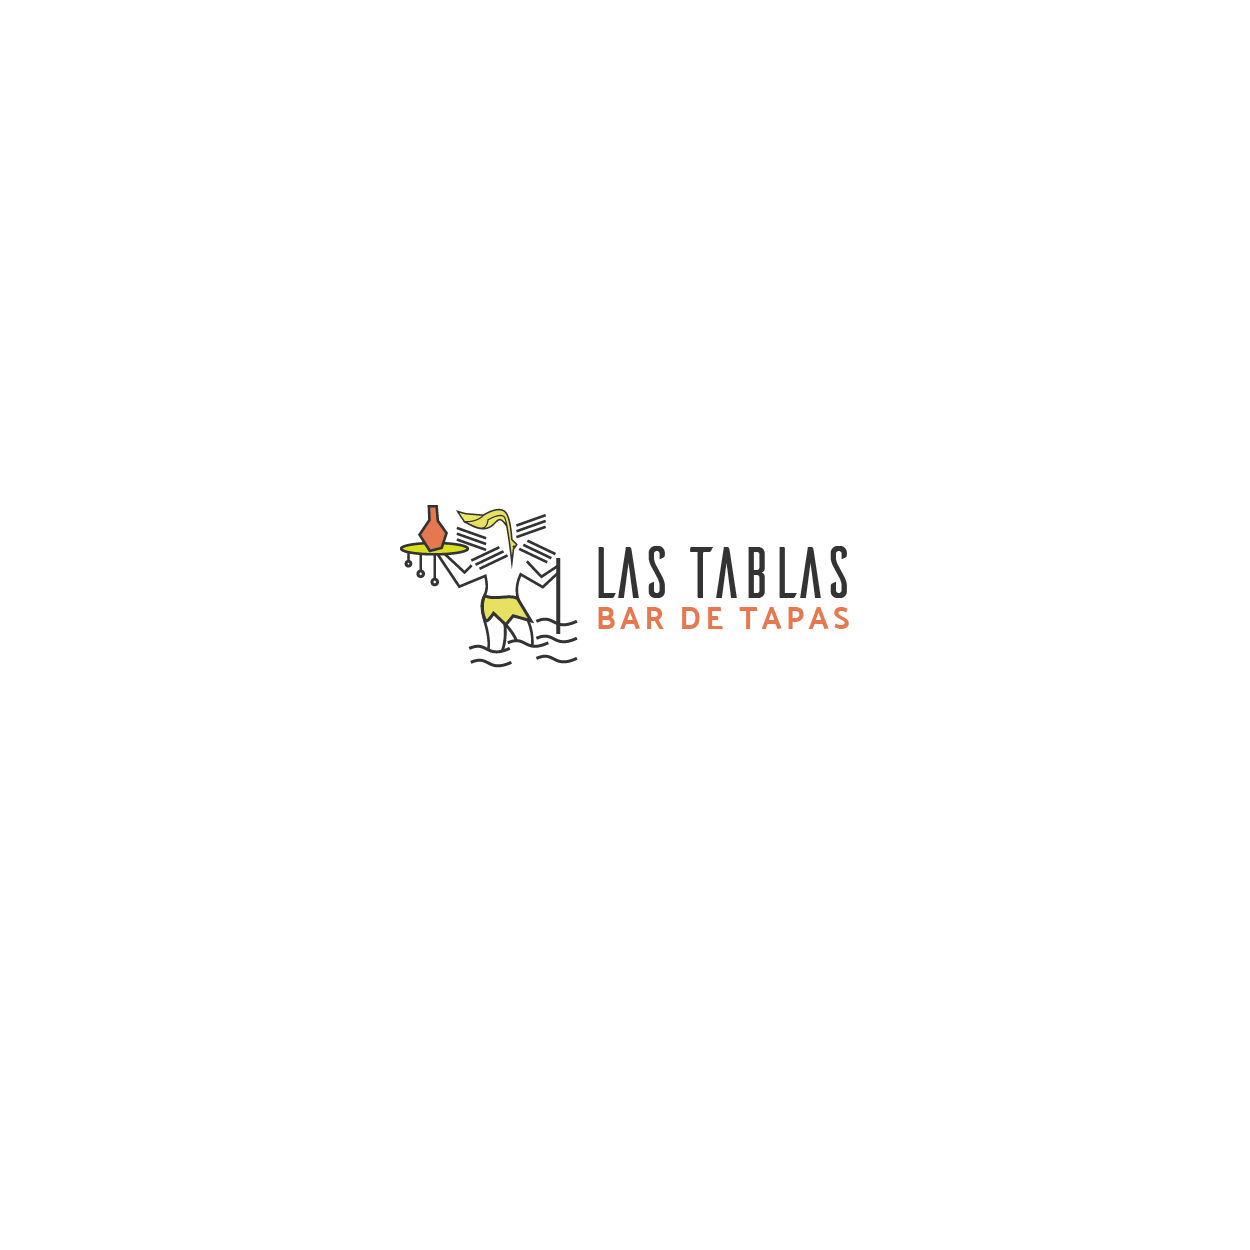 Black and White and Yellow Restaurant Logo - Professional, Modern, Restaurant Logo Design for Las Tablas Bar de ...